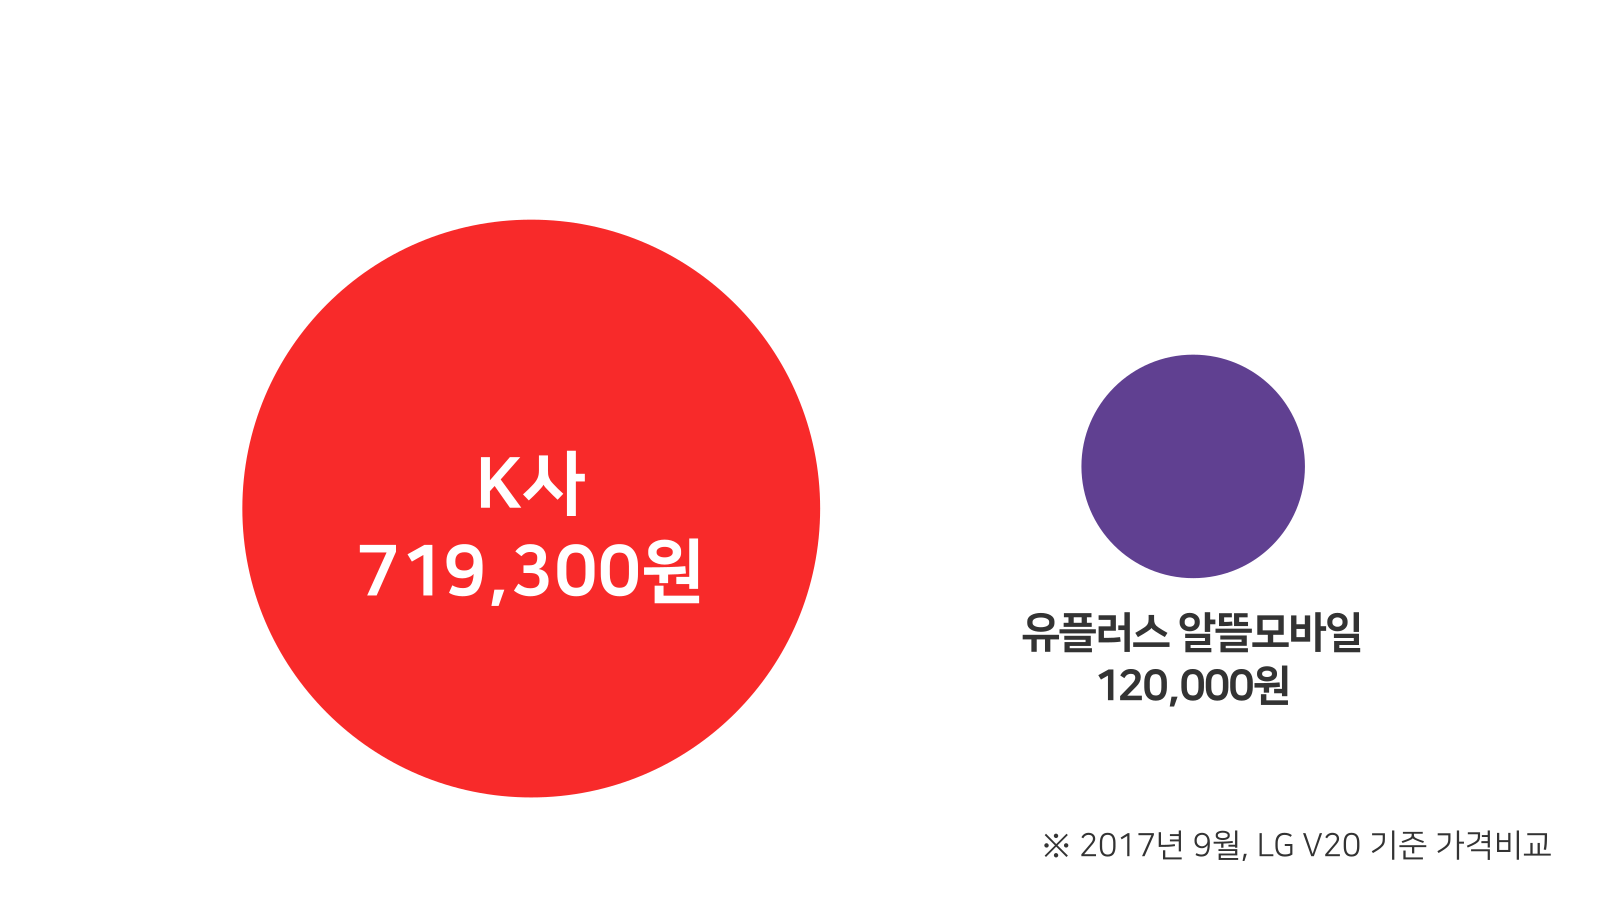 K사와 유플러스 알뜰모바일의 가격 비교. 2017년 9월 LG V20 기준, K사 719,300원, 유플러스 알뜰모바일 120,000원.